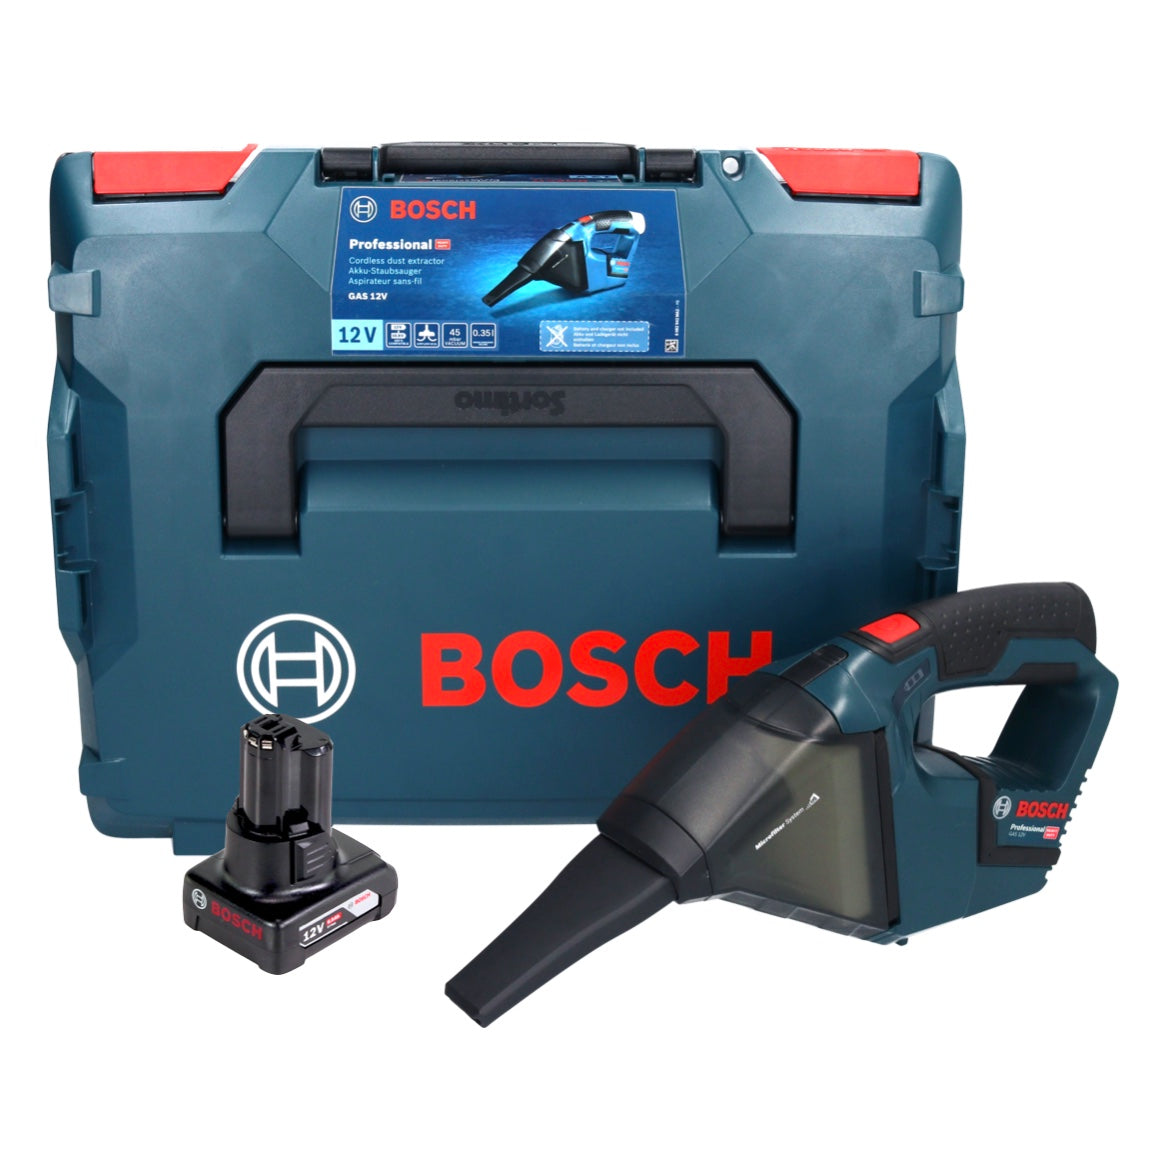 Bosch GAS 12V Professional Akku Staubsauger 12 V 0,35 l + 1x Akku 6,0 Ah + L-Boxx - ohne Ladegerät - Toolbrothers